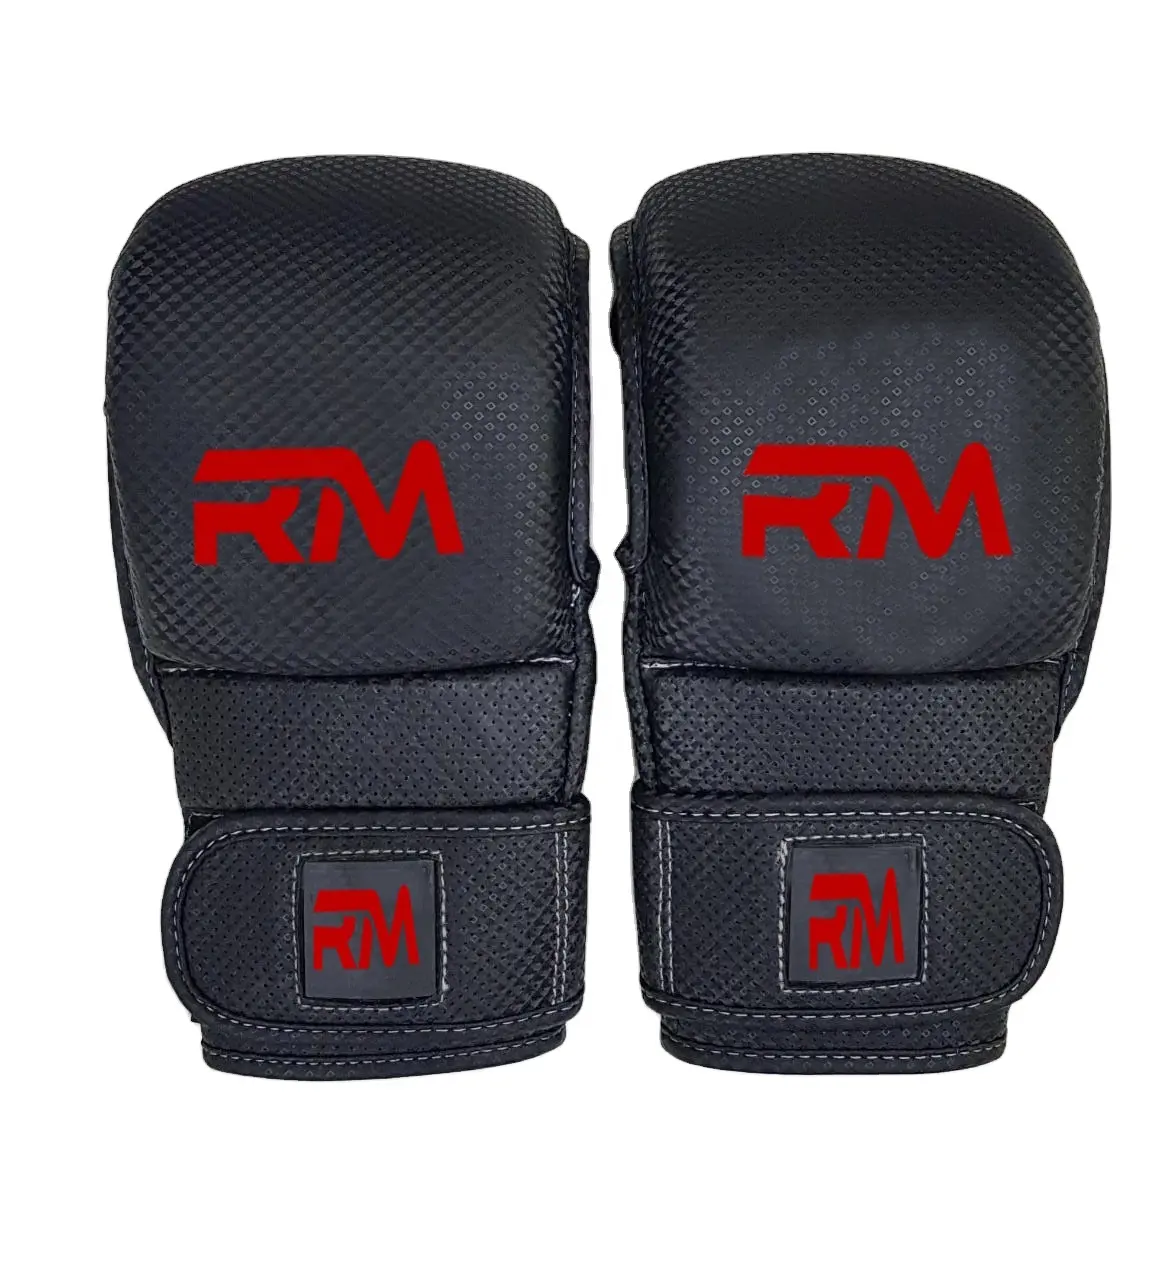 Supreme ชุด MMA ถุงมือมวย Shute ถุงมือสำหรับผู้ชายผู้หญิงขายส่งเสนอ Mma โรงยิม